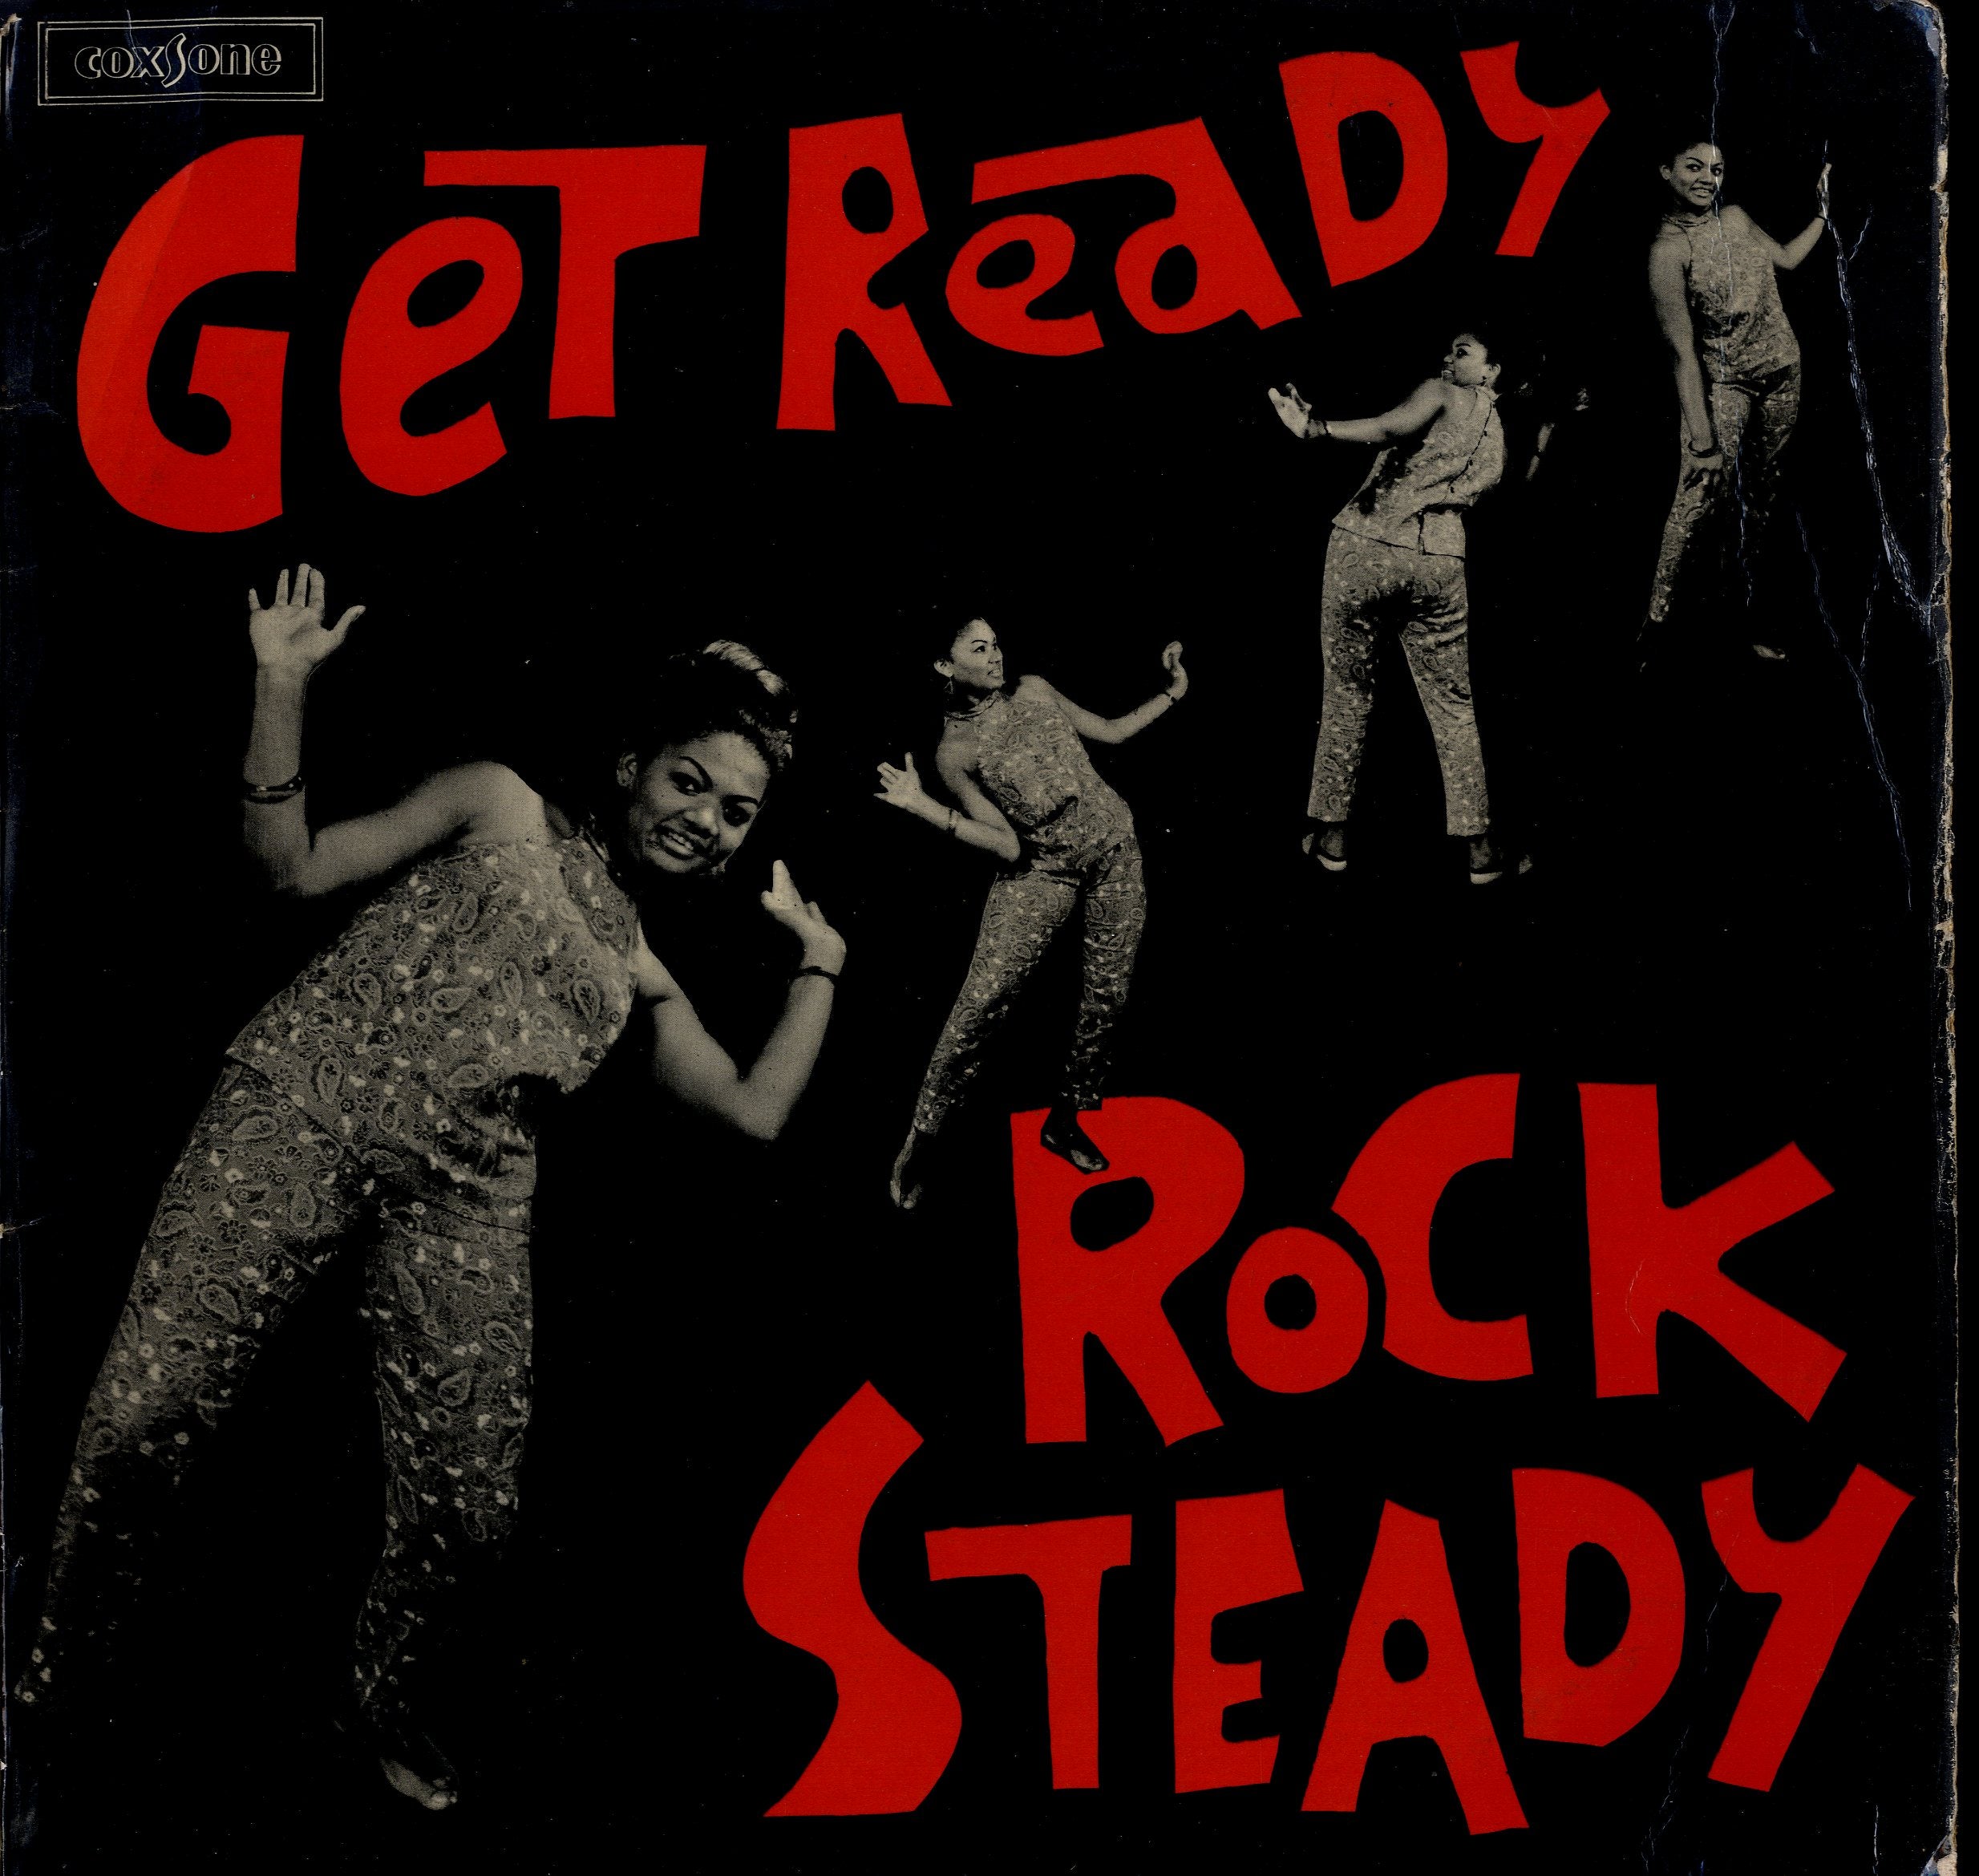 V.A [Get Ready Rock Steady]